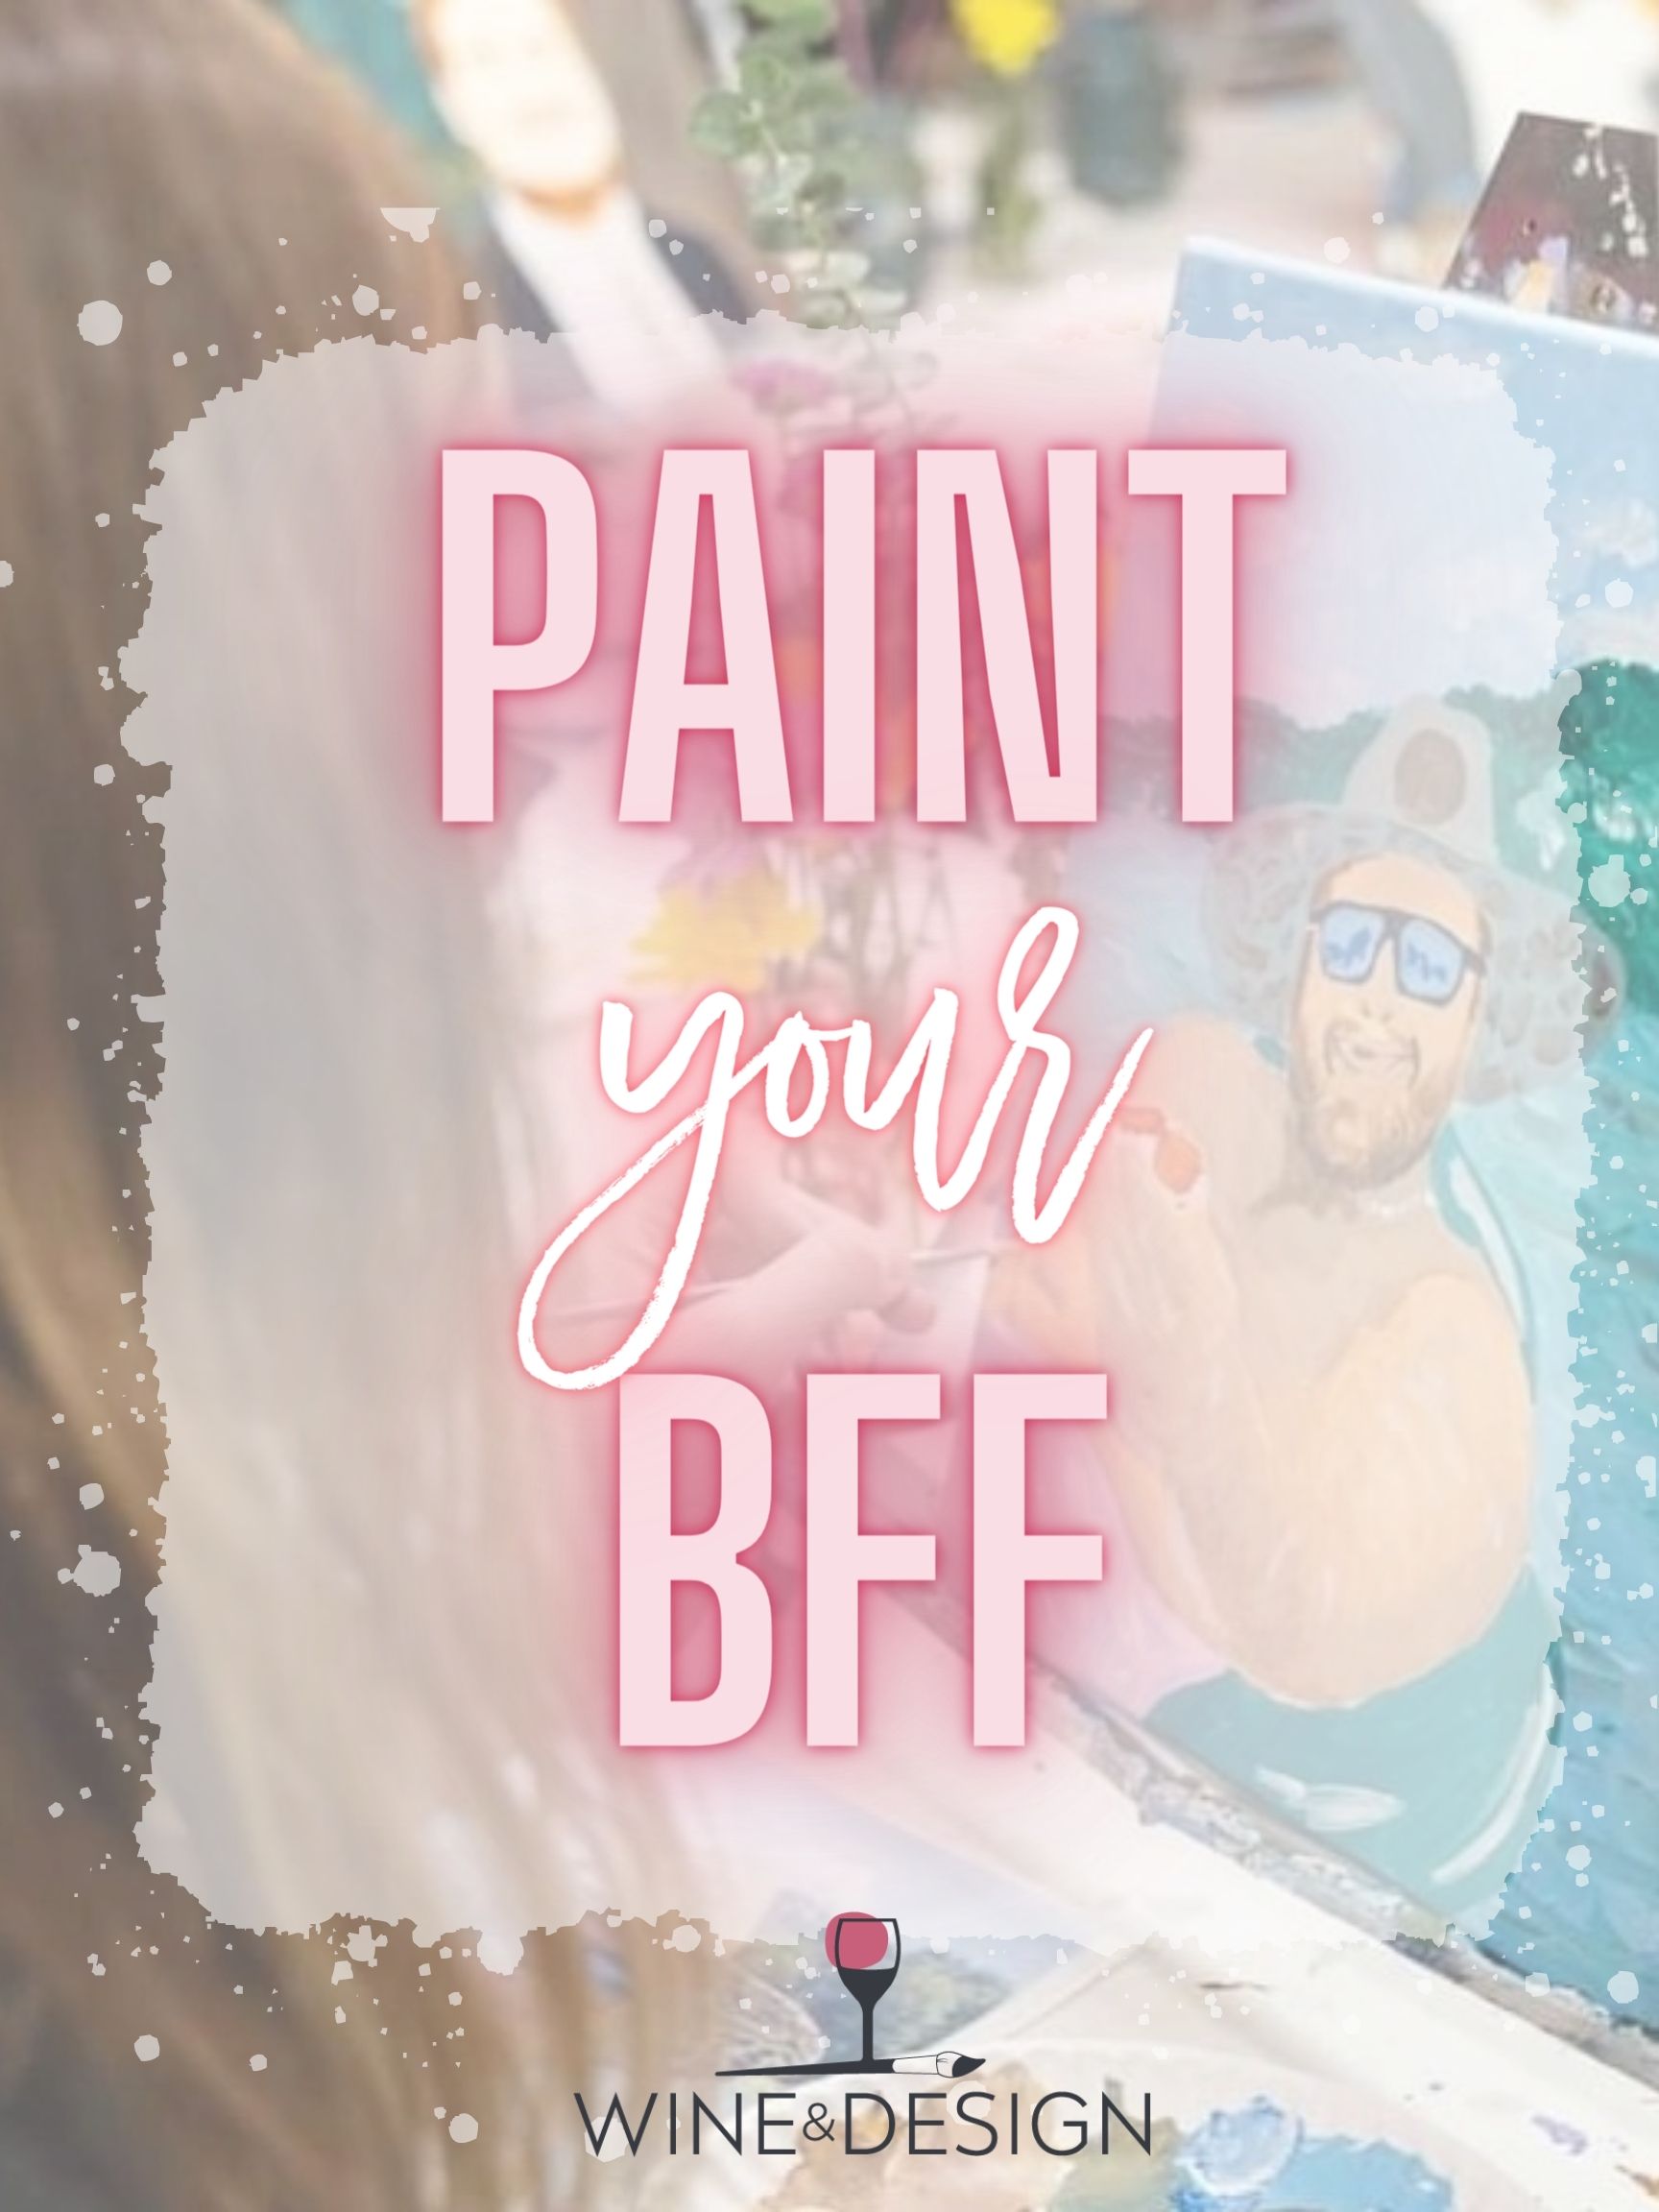 NEW CRAZE! "Paint Your BFF!" Adult Studio!